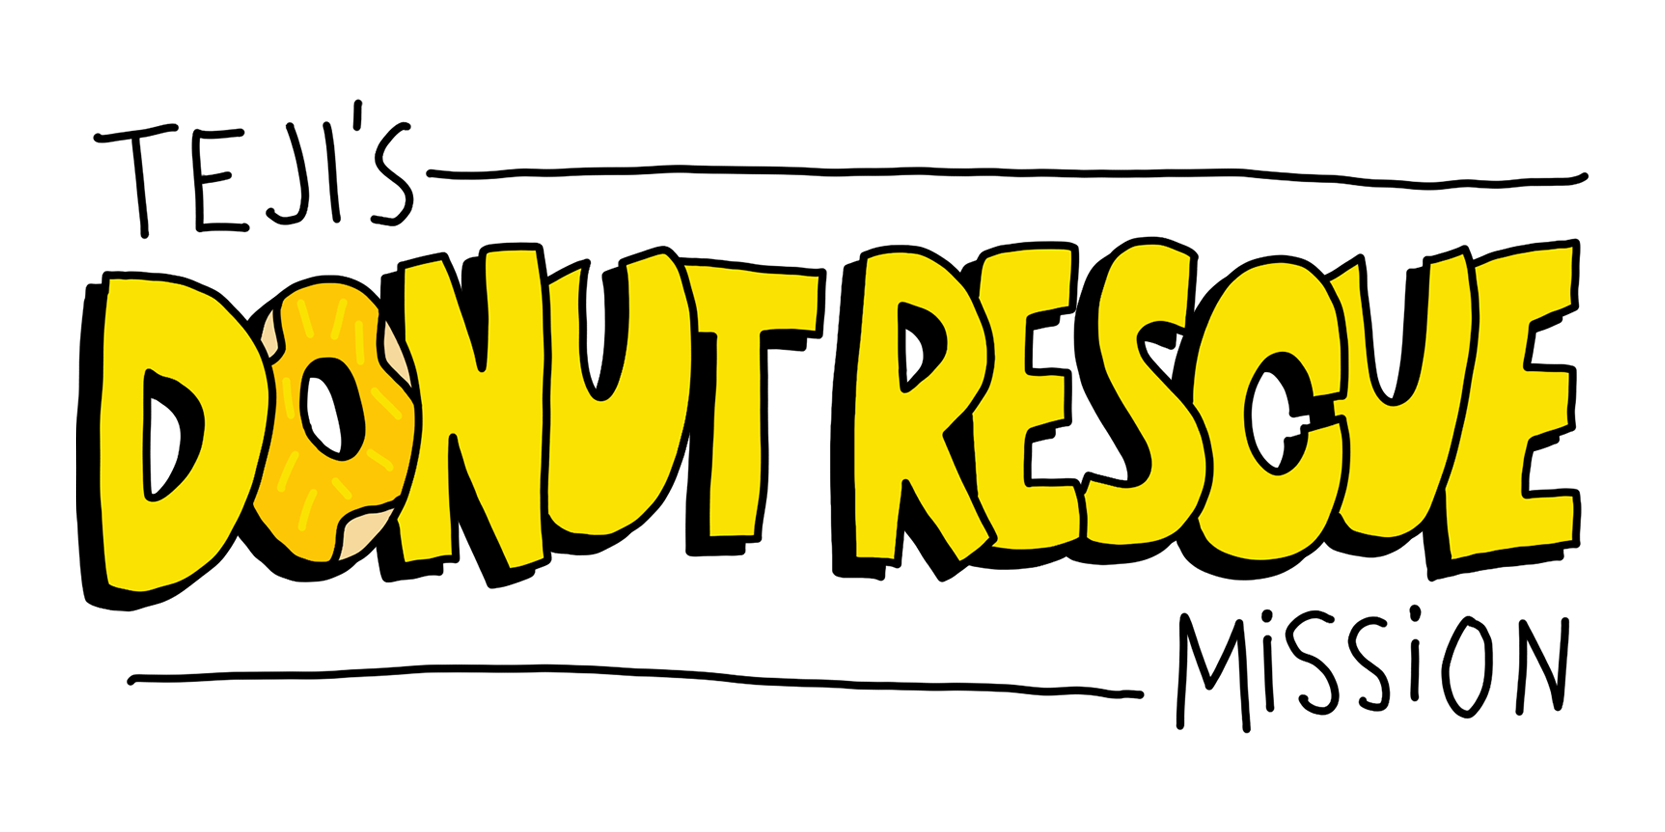 Teji's Donut Rescue Mission